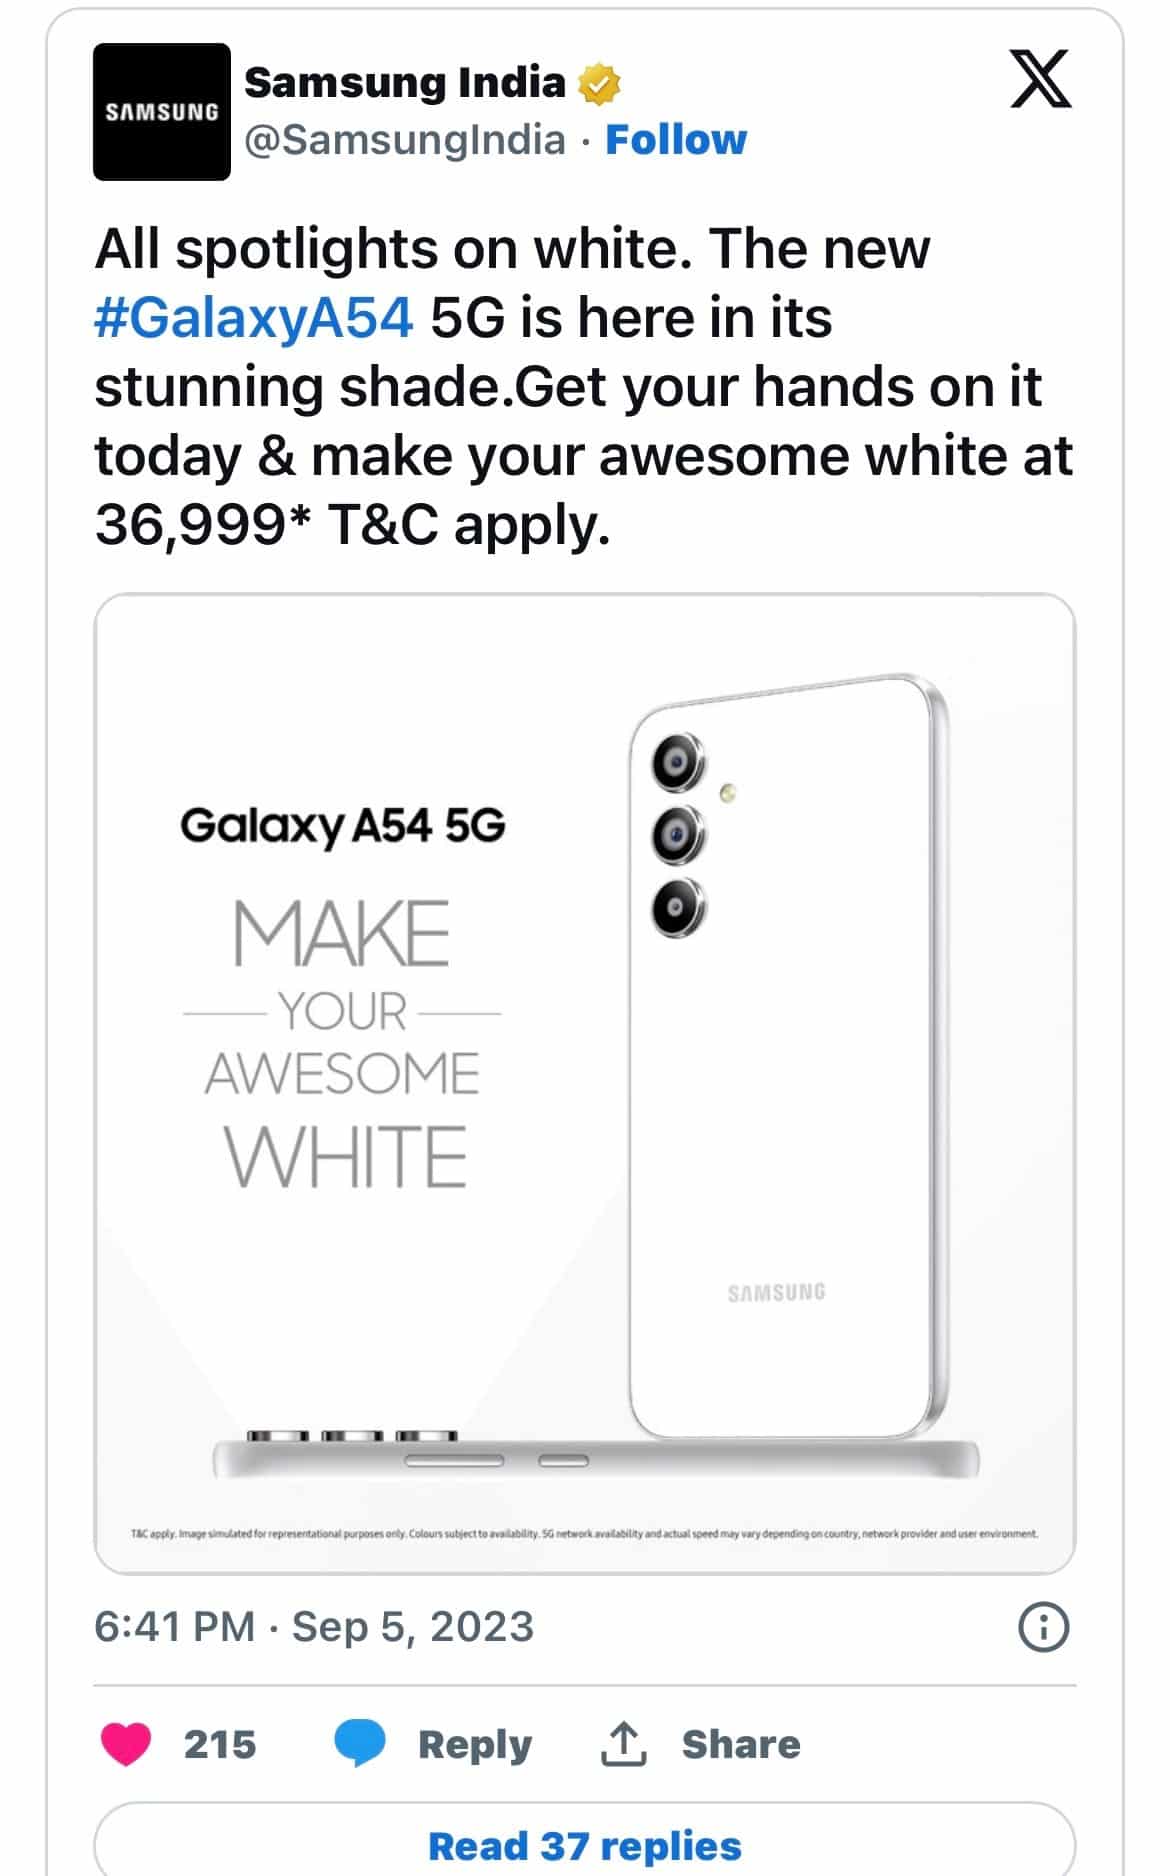 Samsung Galaxy A54 5G key Specifications